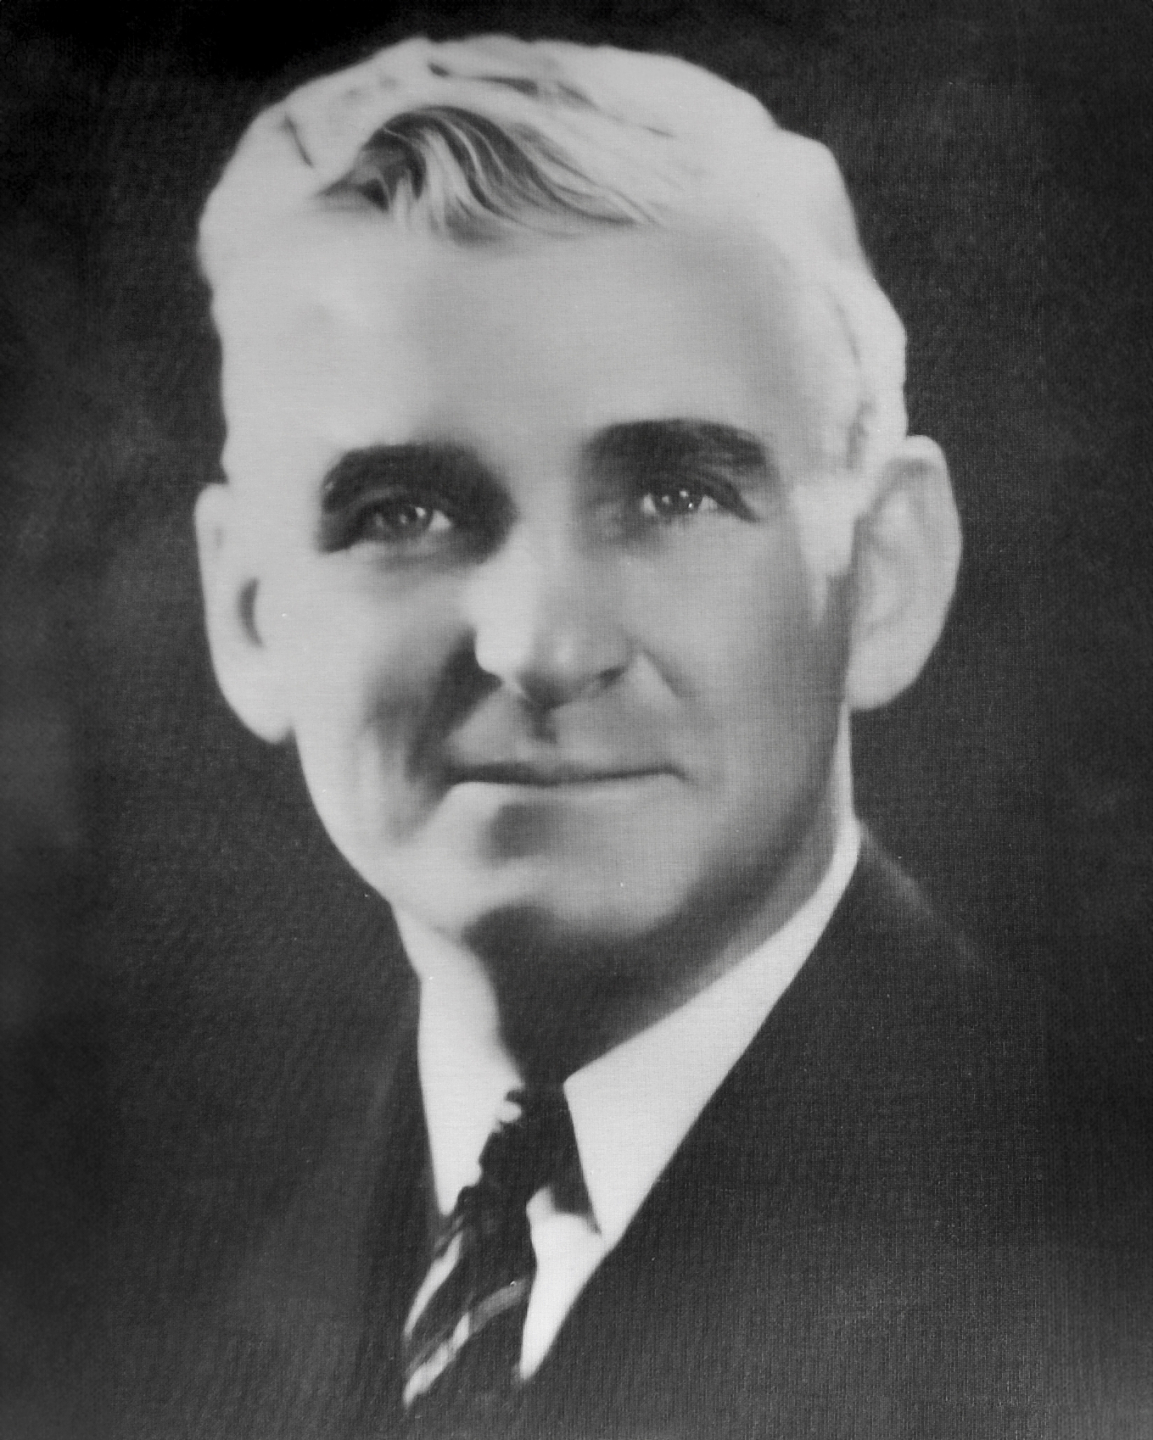 Portrait of John L. McCormick, Sr.